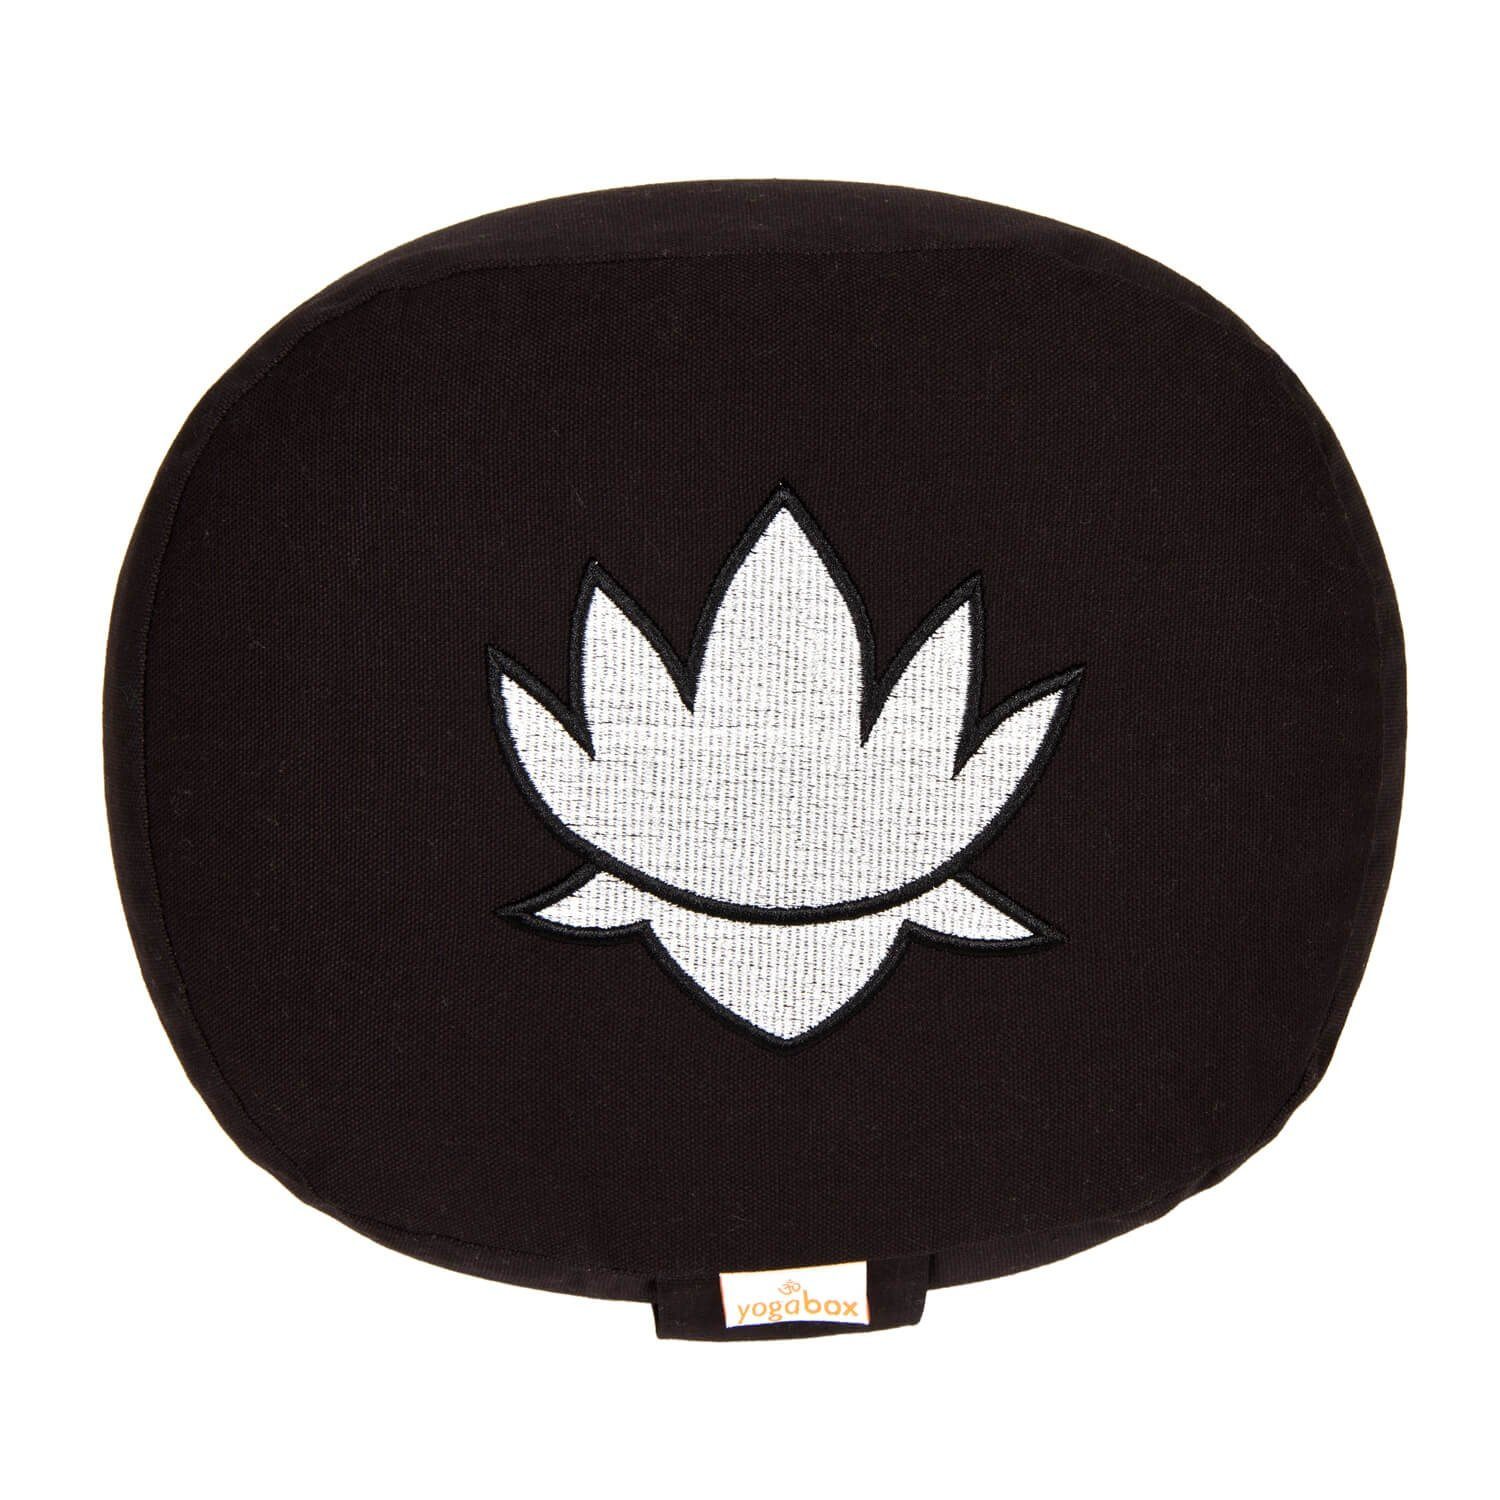 BASIC Lotus schwarz oval Yogakissen yogabox Stick